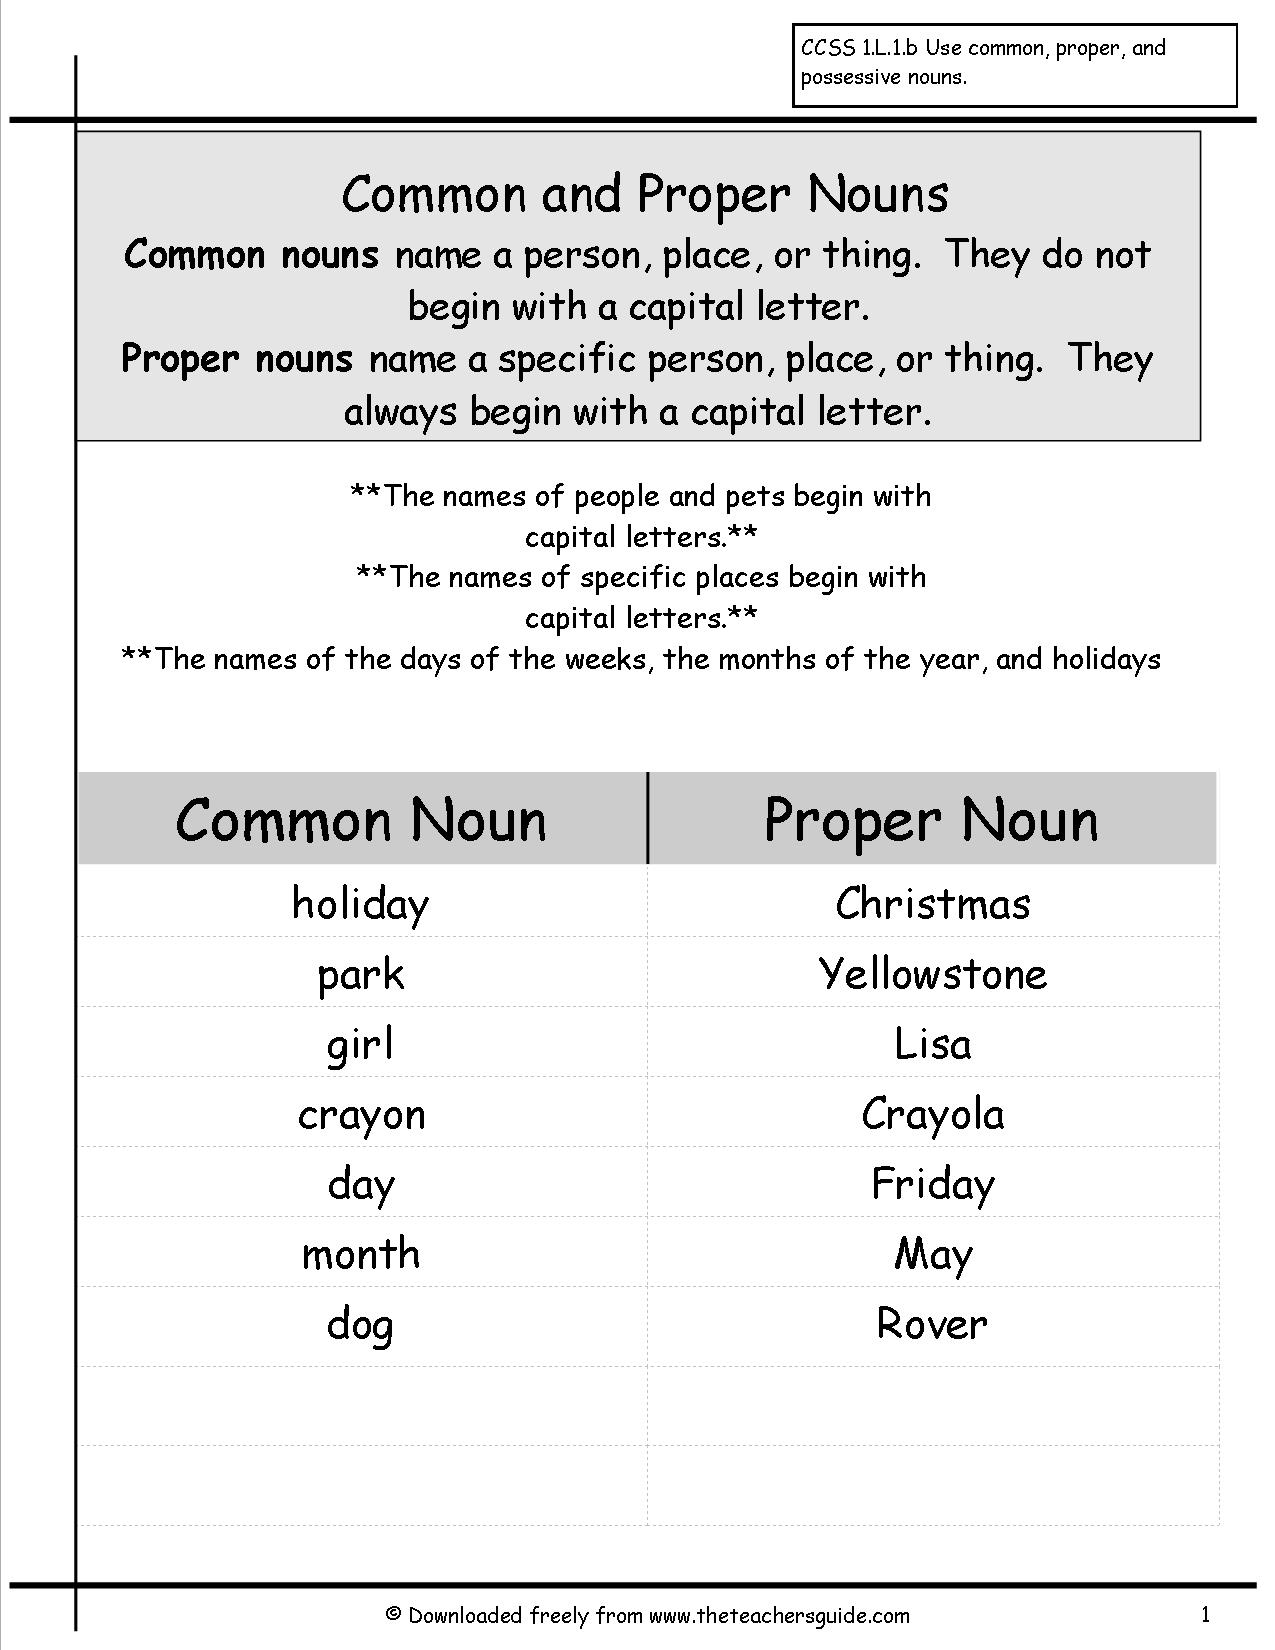 types-of-nouns-worksheet